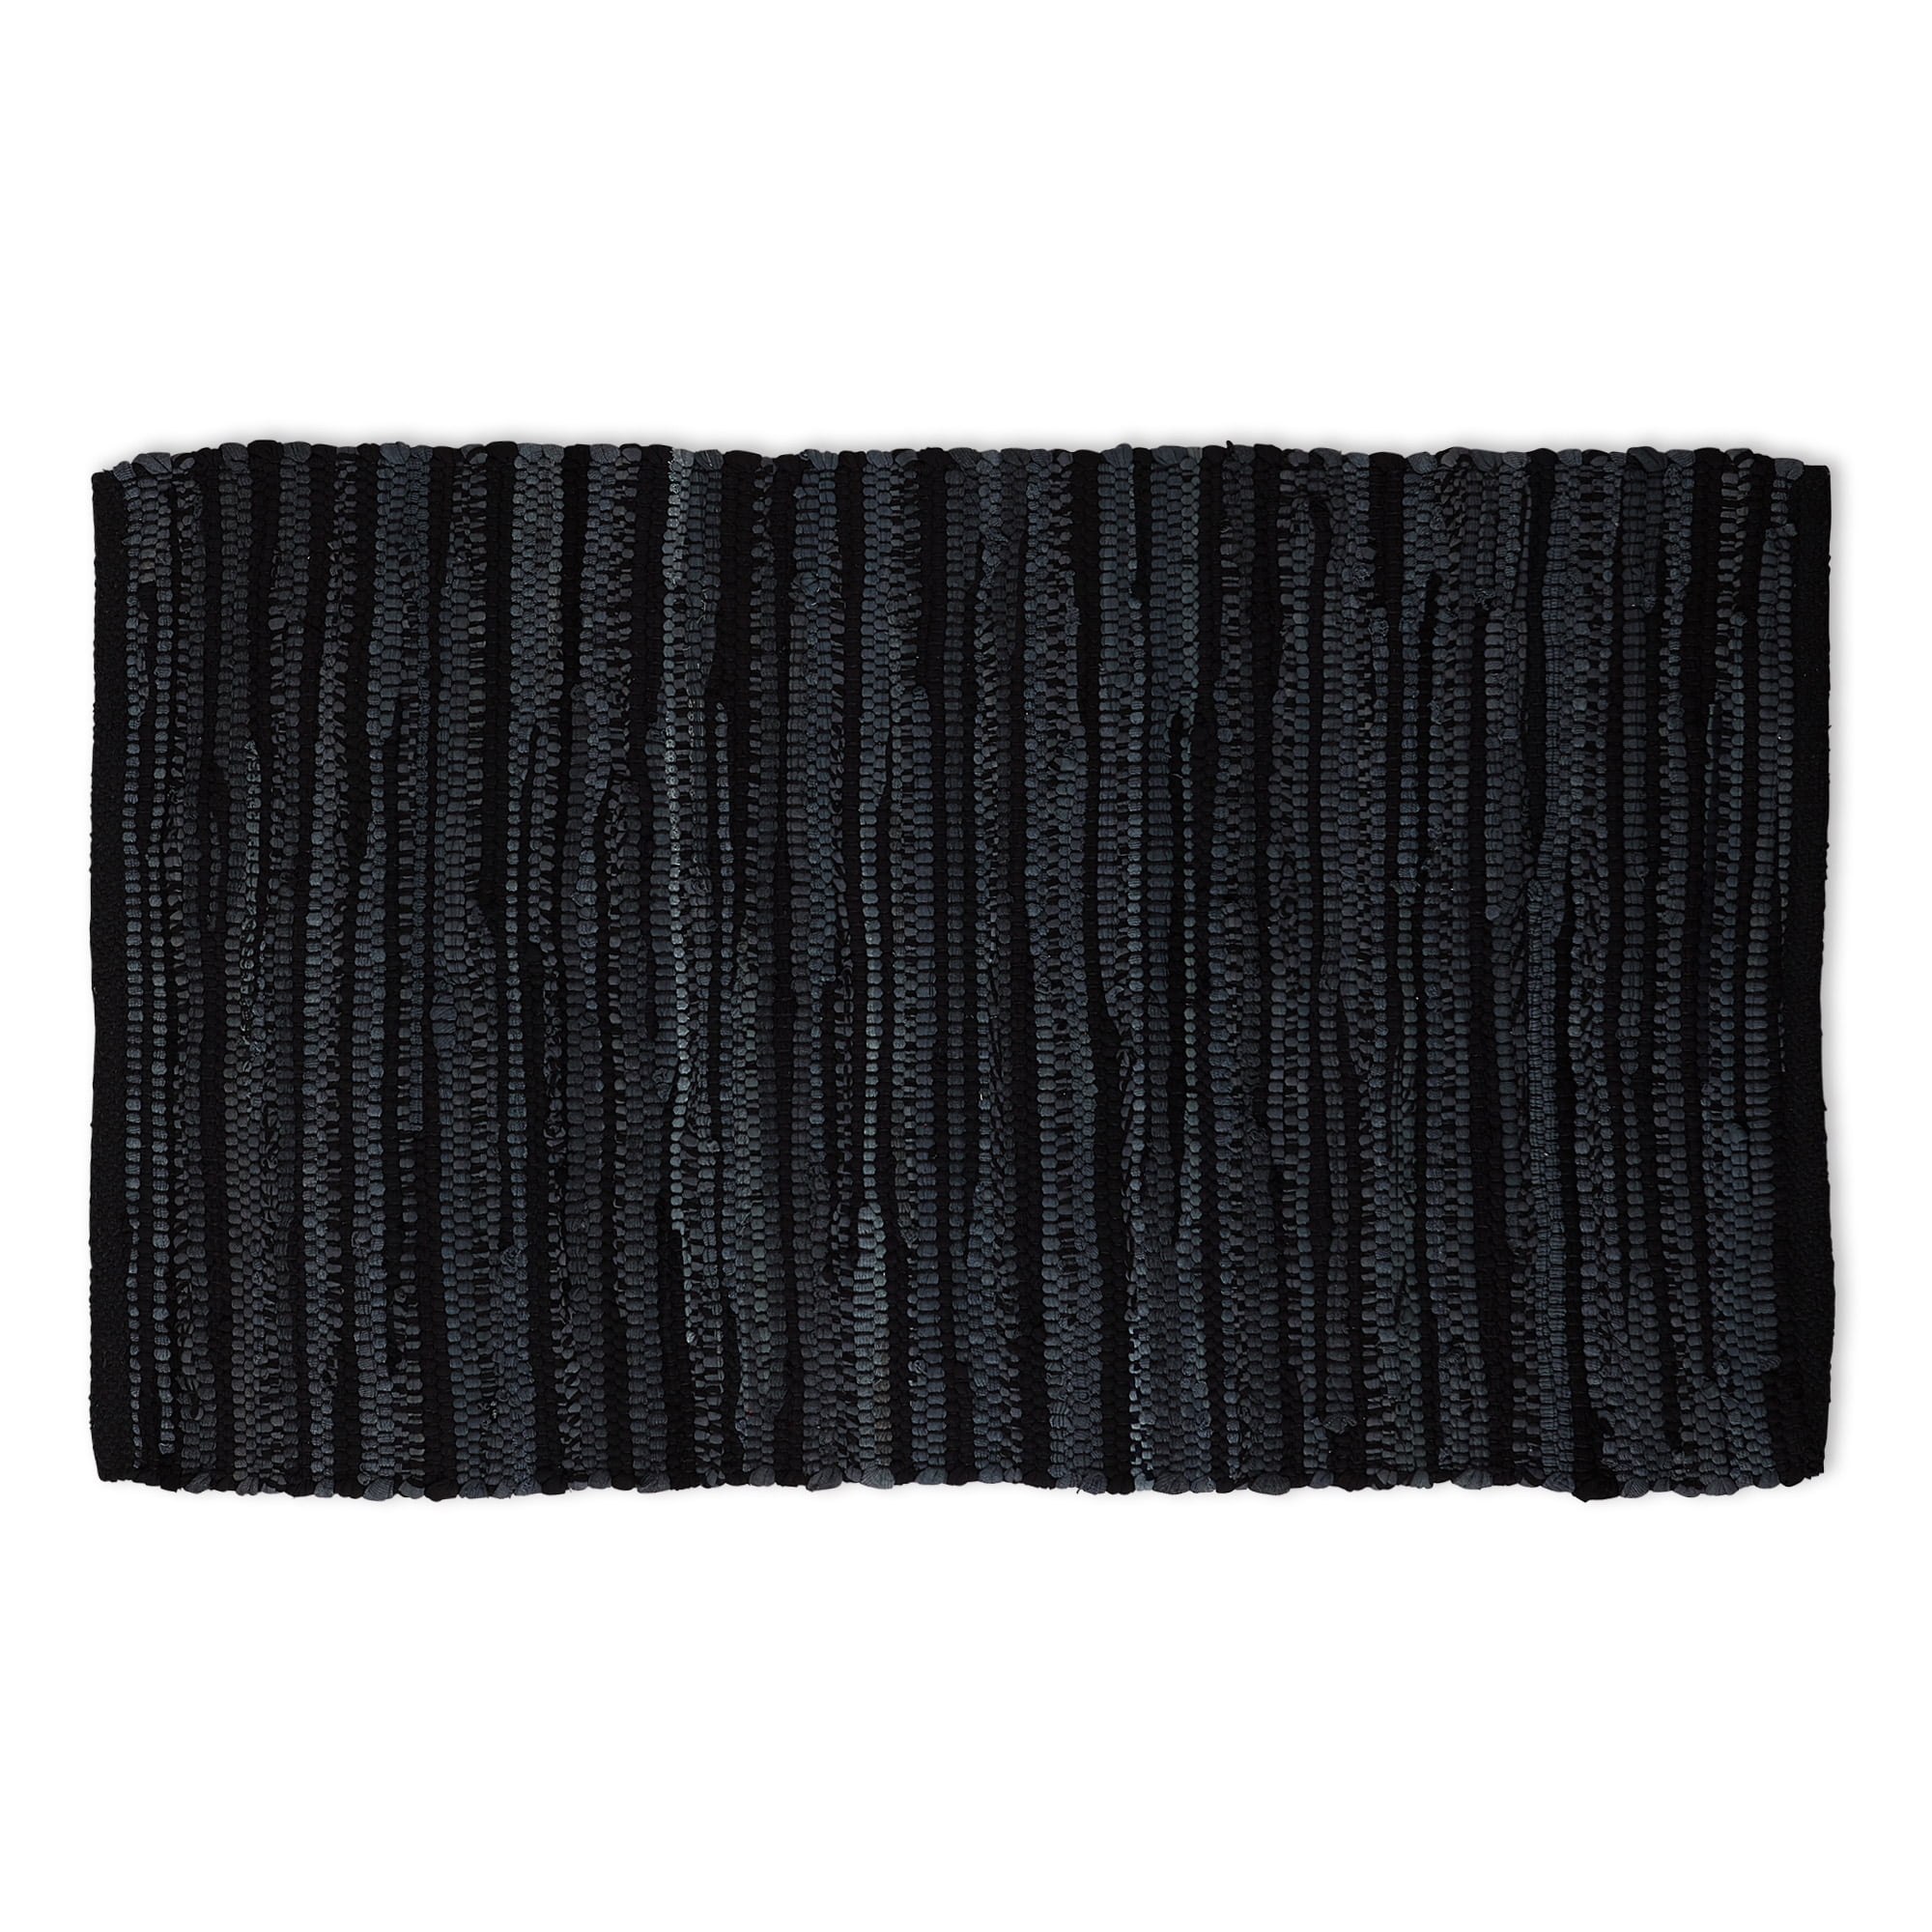 green Handwoven rag rug blue black and white stripes